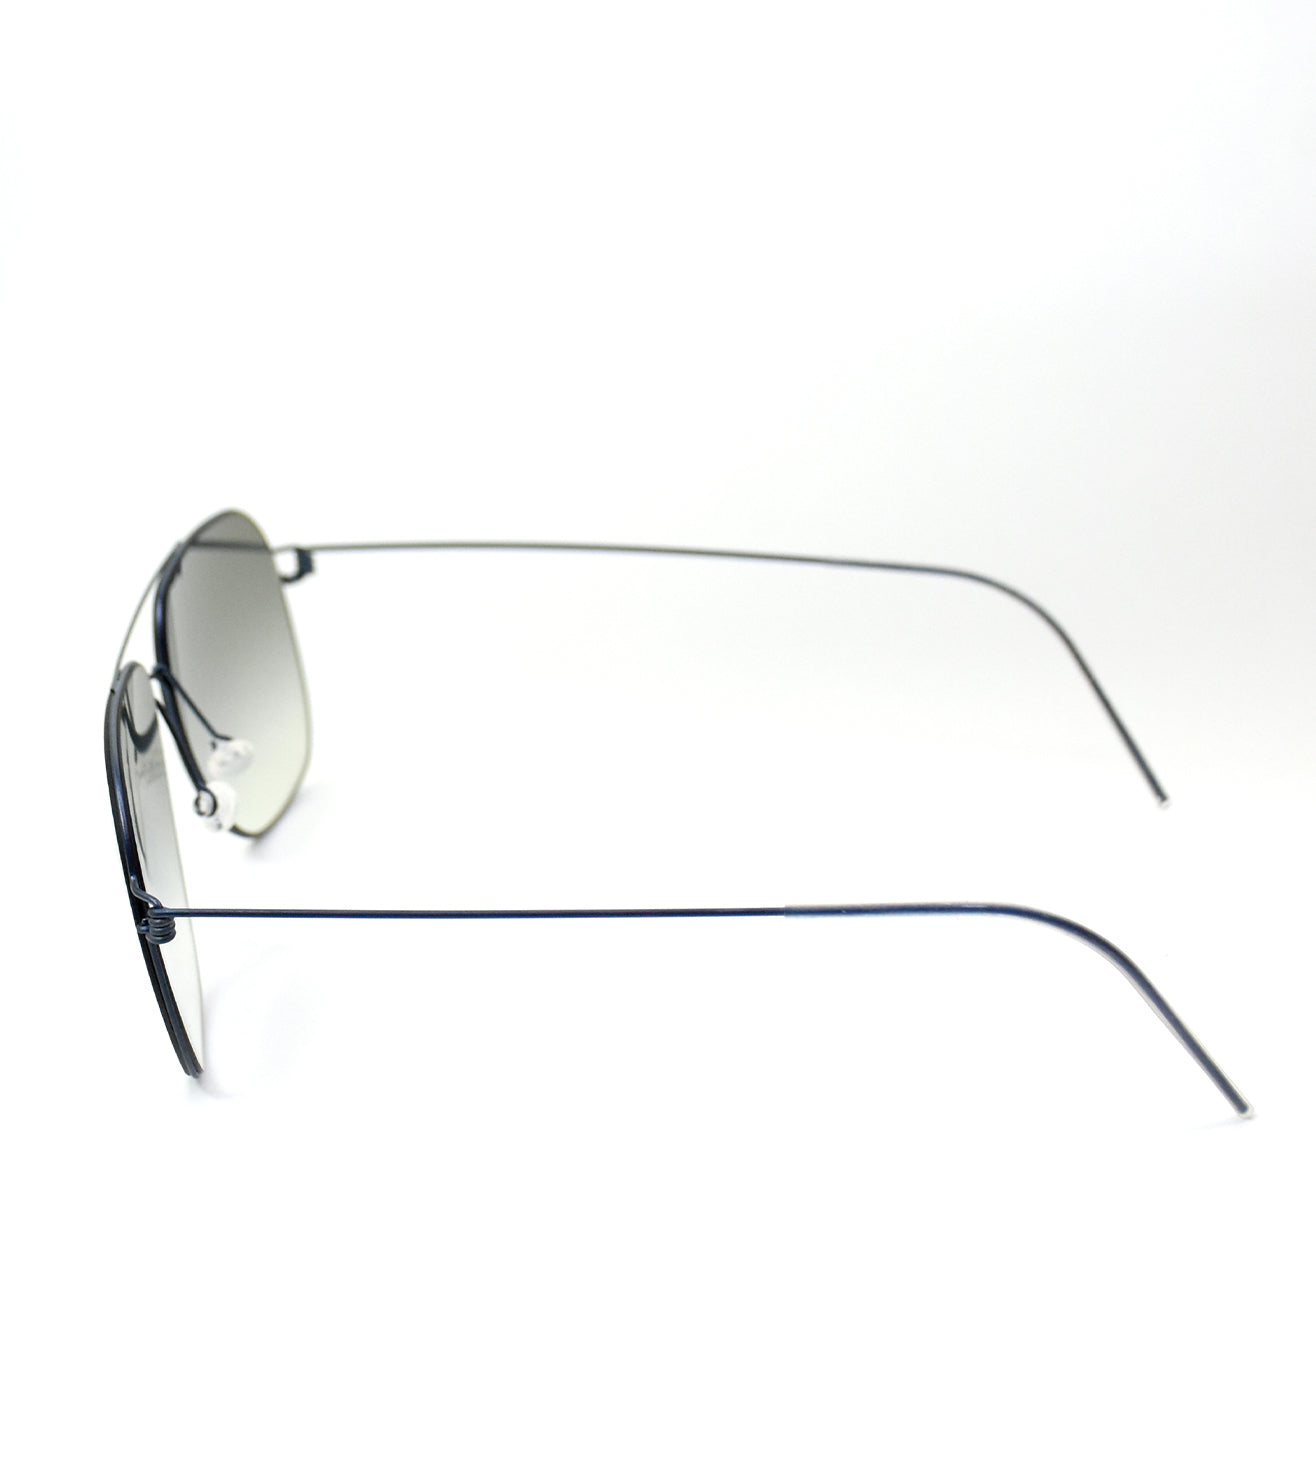 Lindberg Unisex Grey Aviator Sunglasses